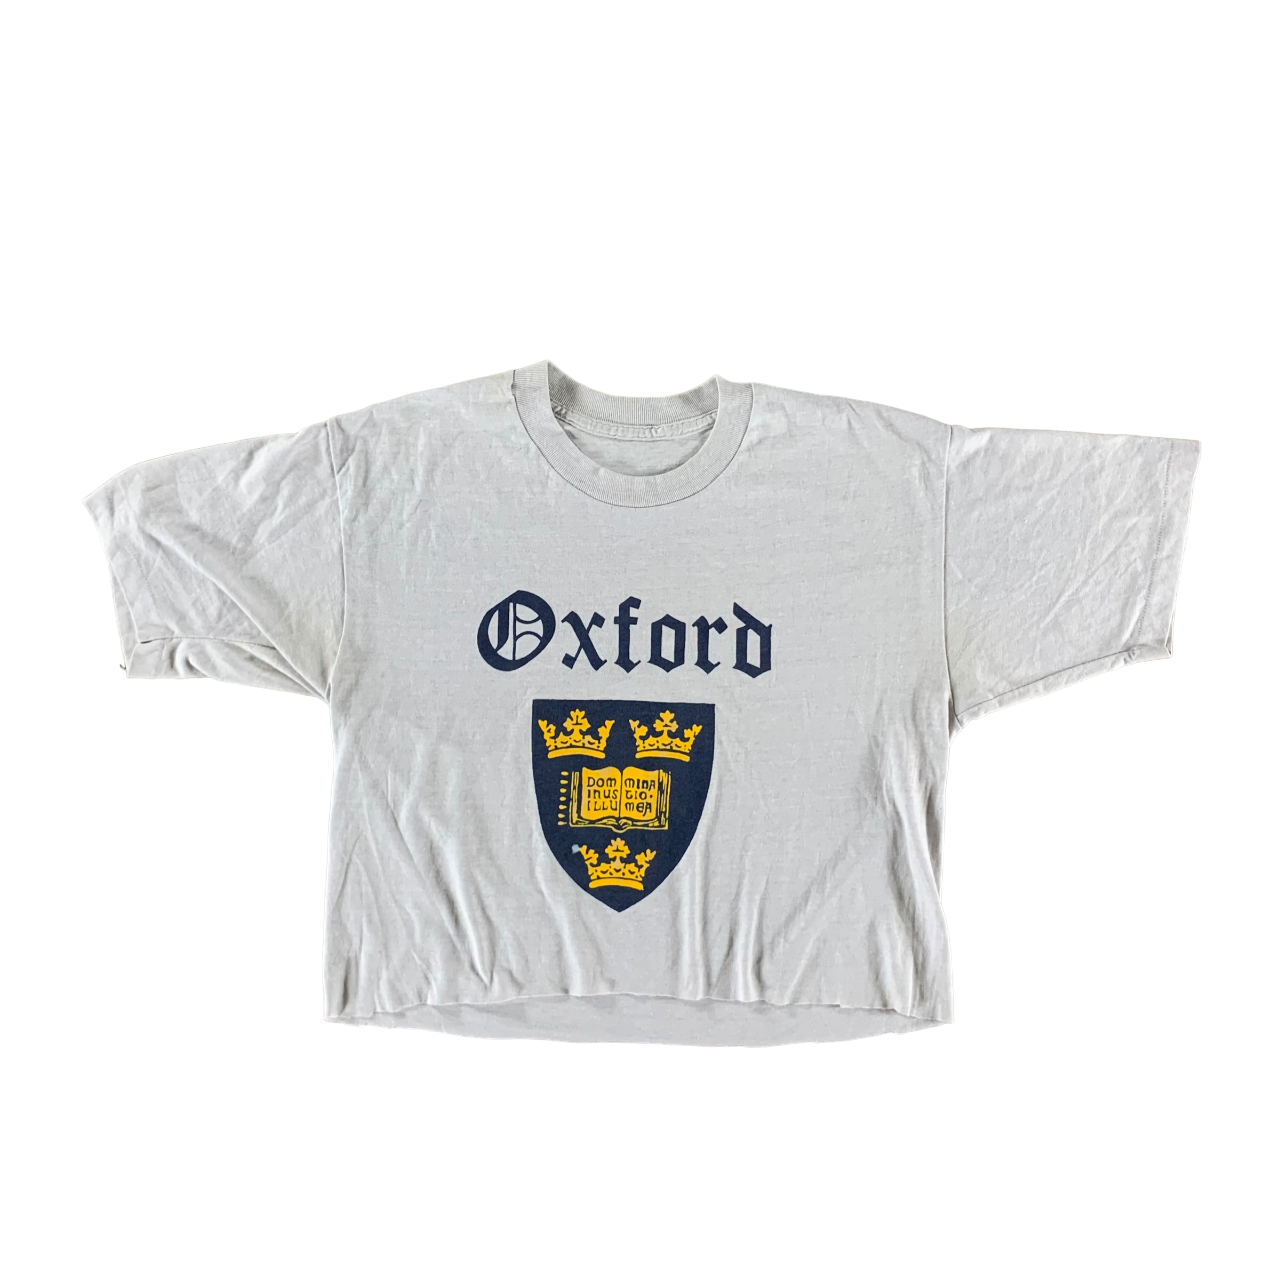 Vintage 1980s University of Oxford T-shirt size Large